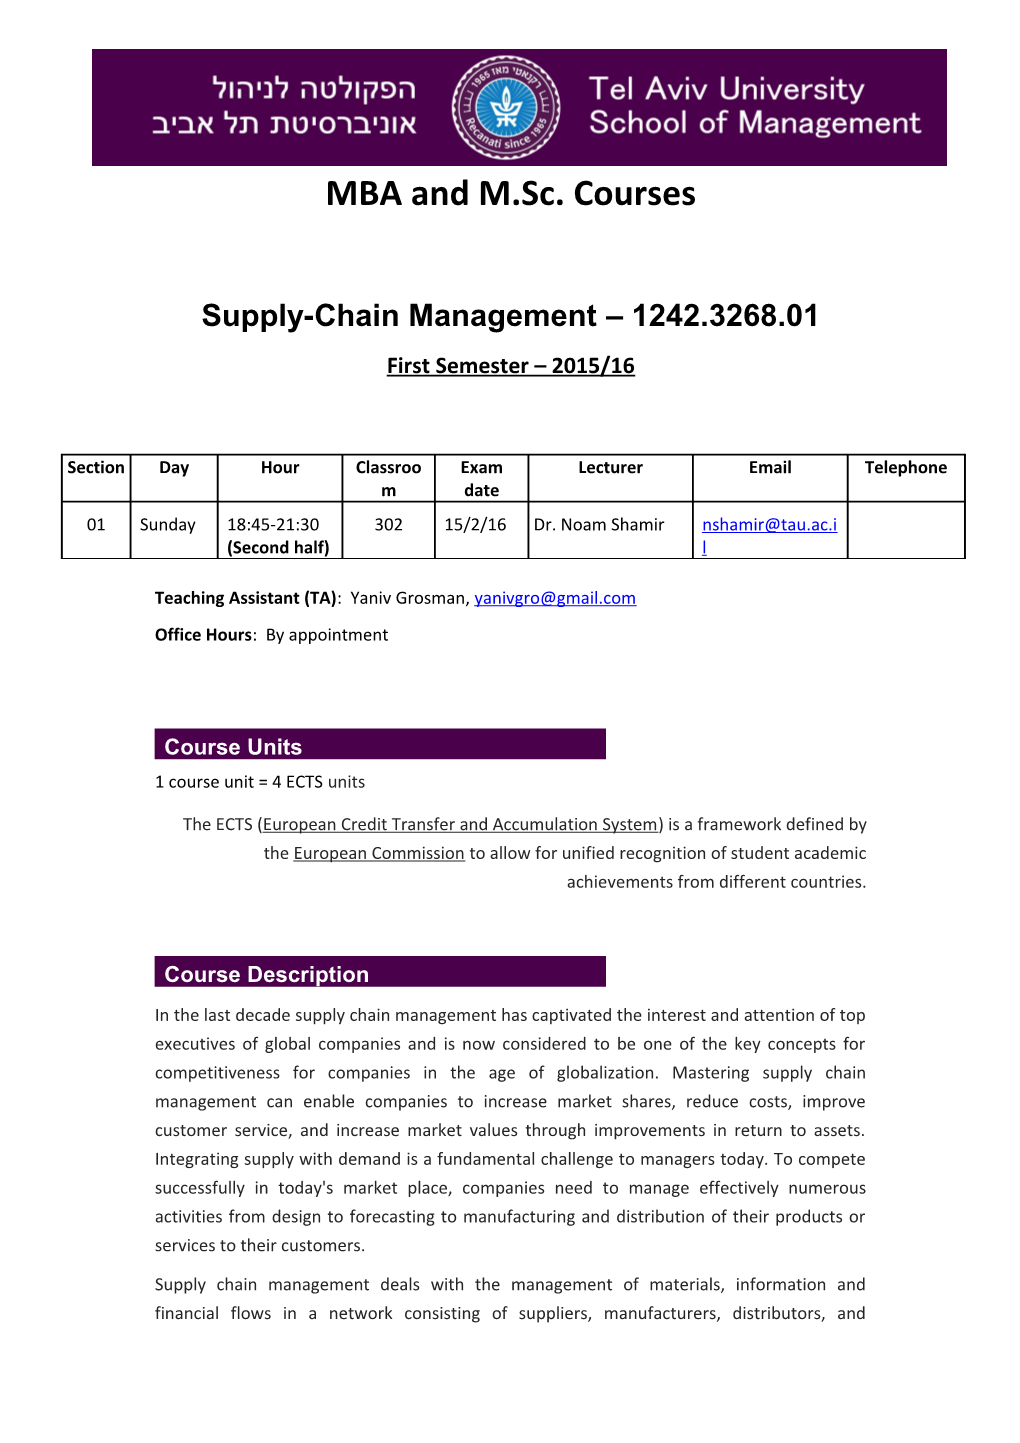 1242.3268.01 Supply-Chain Management